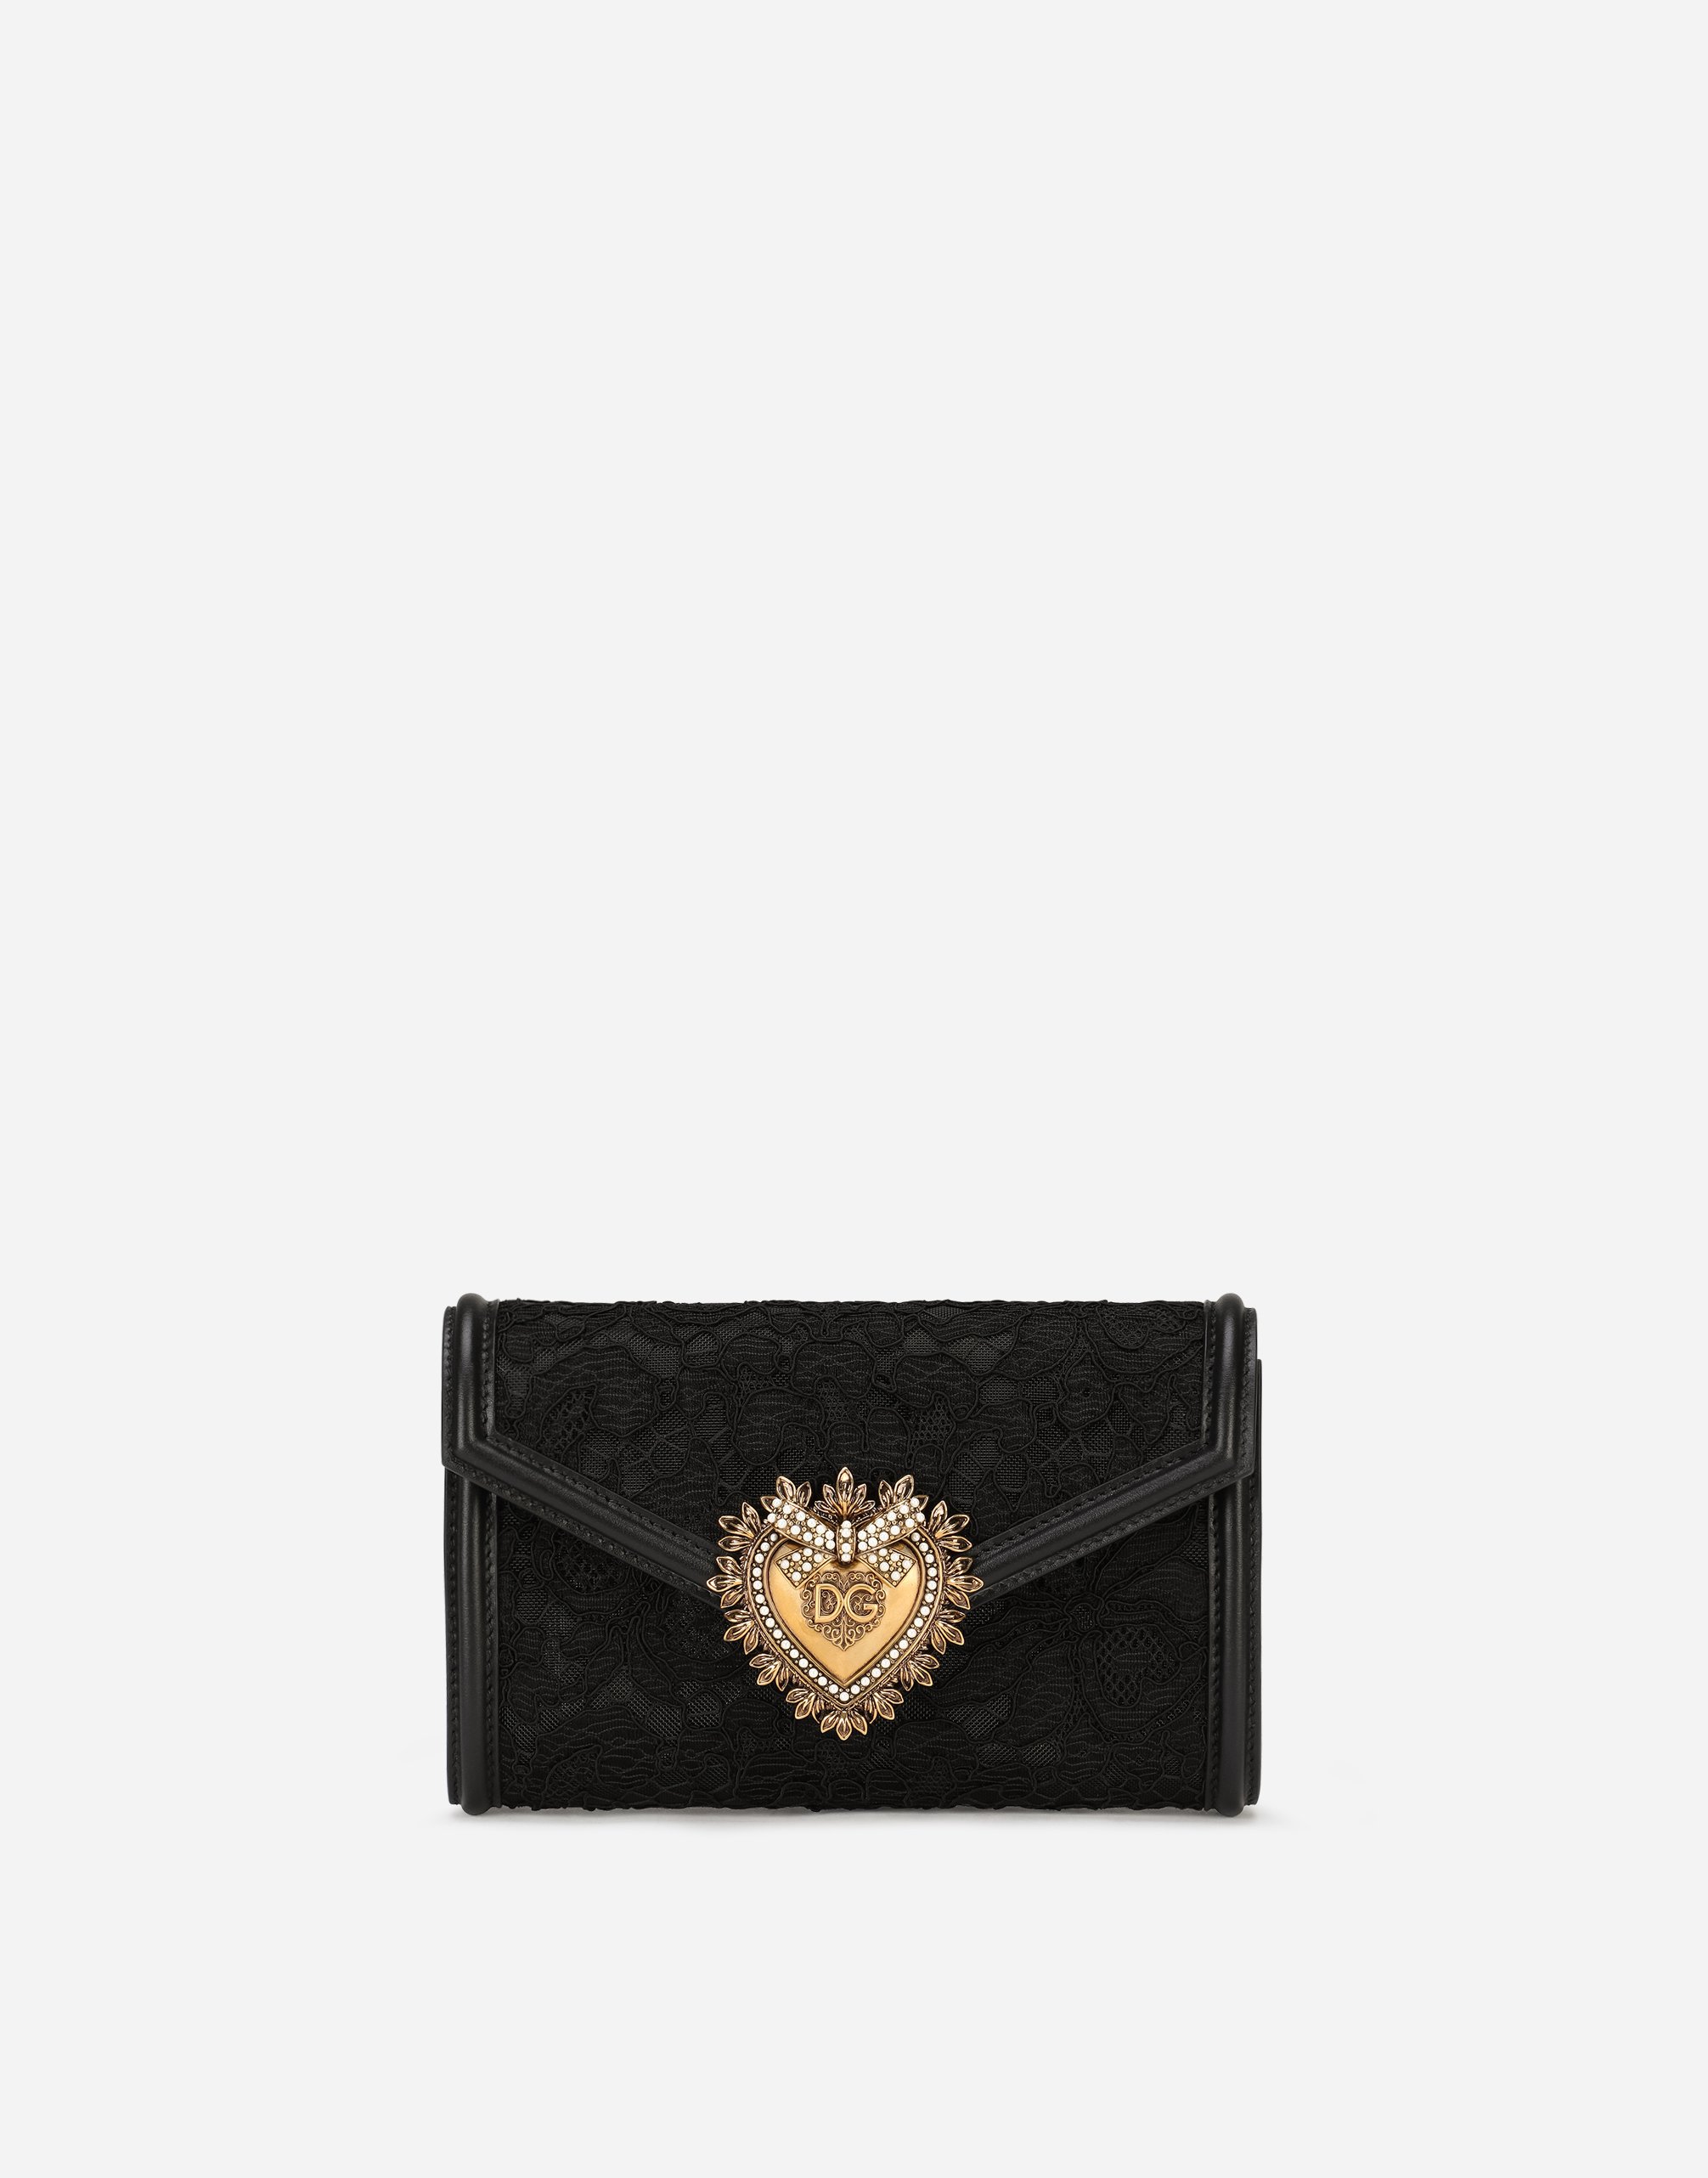 Lace Devotion mini bag in Black